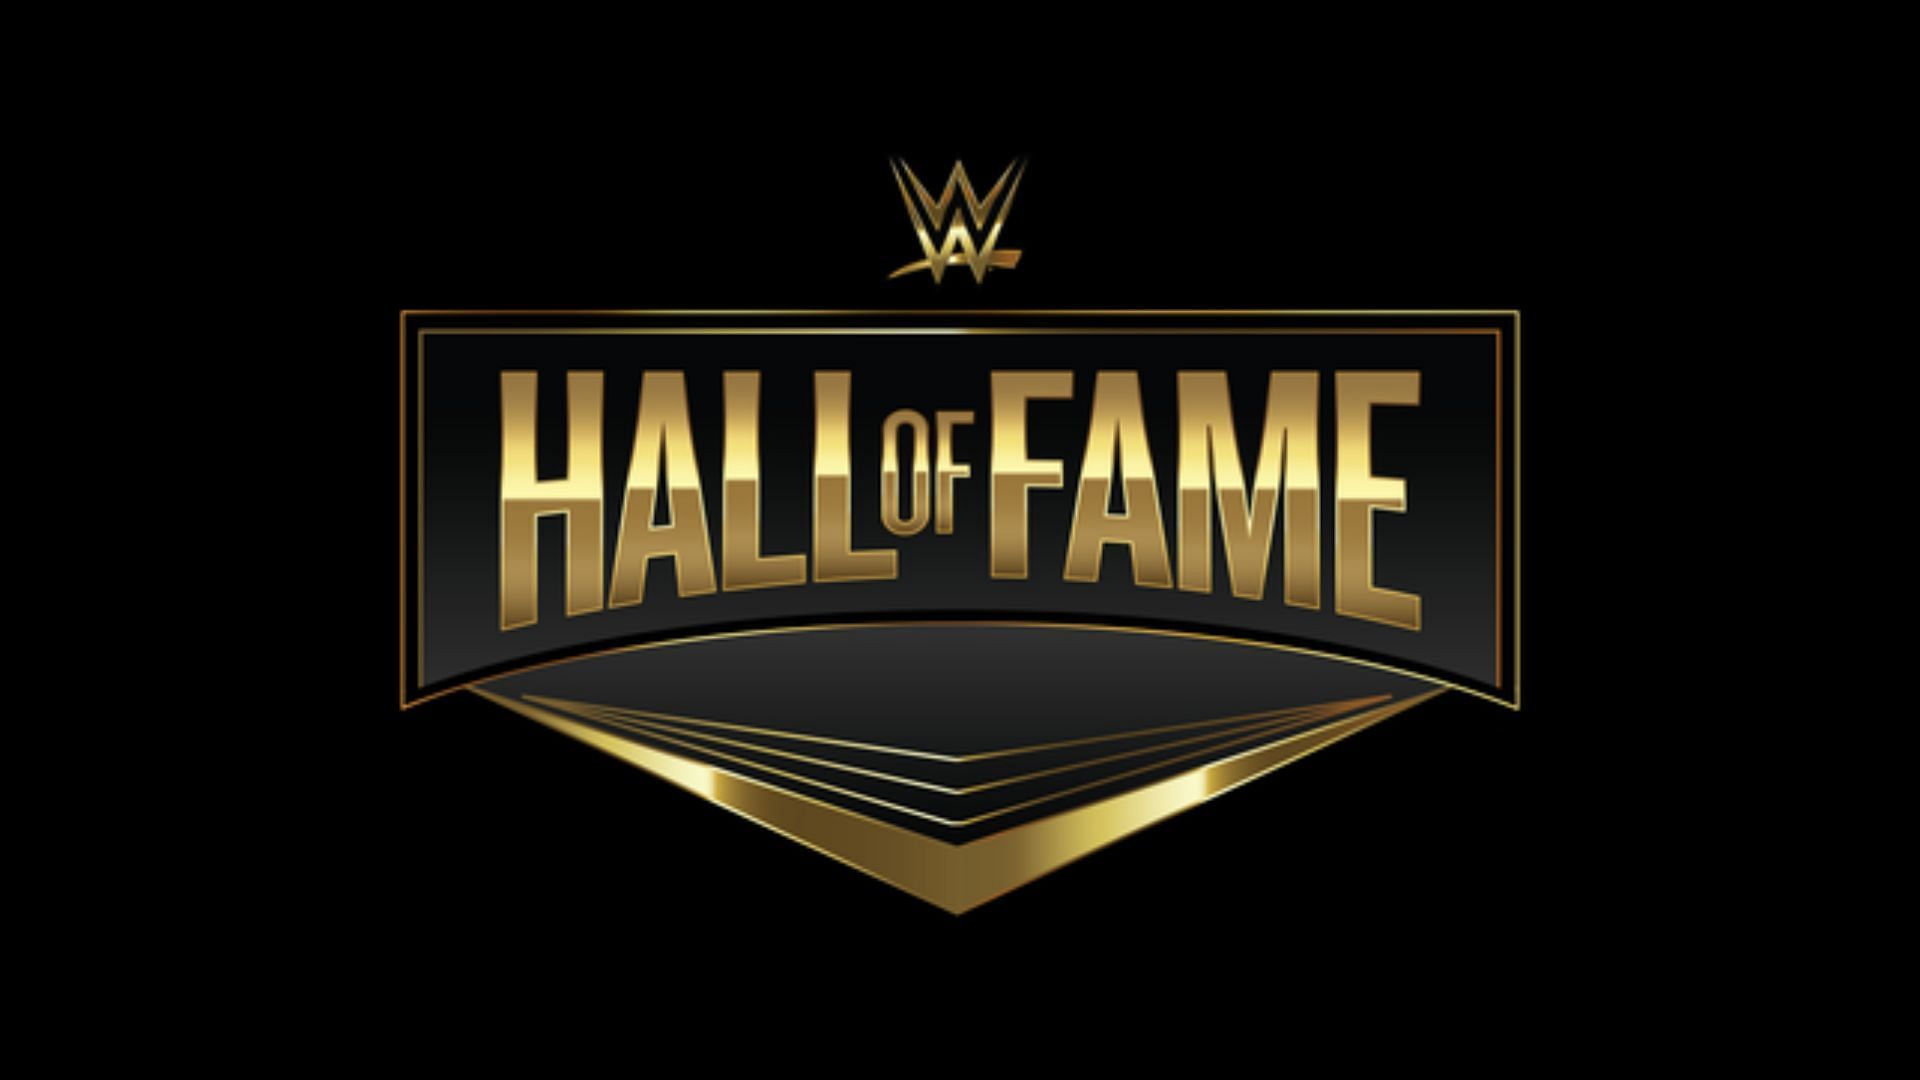 Hall of fame tiny. Зал славы ВВЕ. Зал славы WWE. WWE Hall of Fame 2018. Hall of Fame 2020.